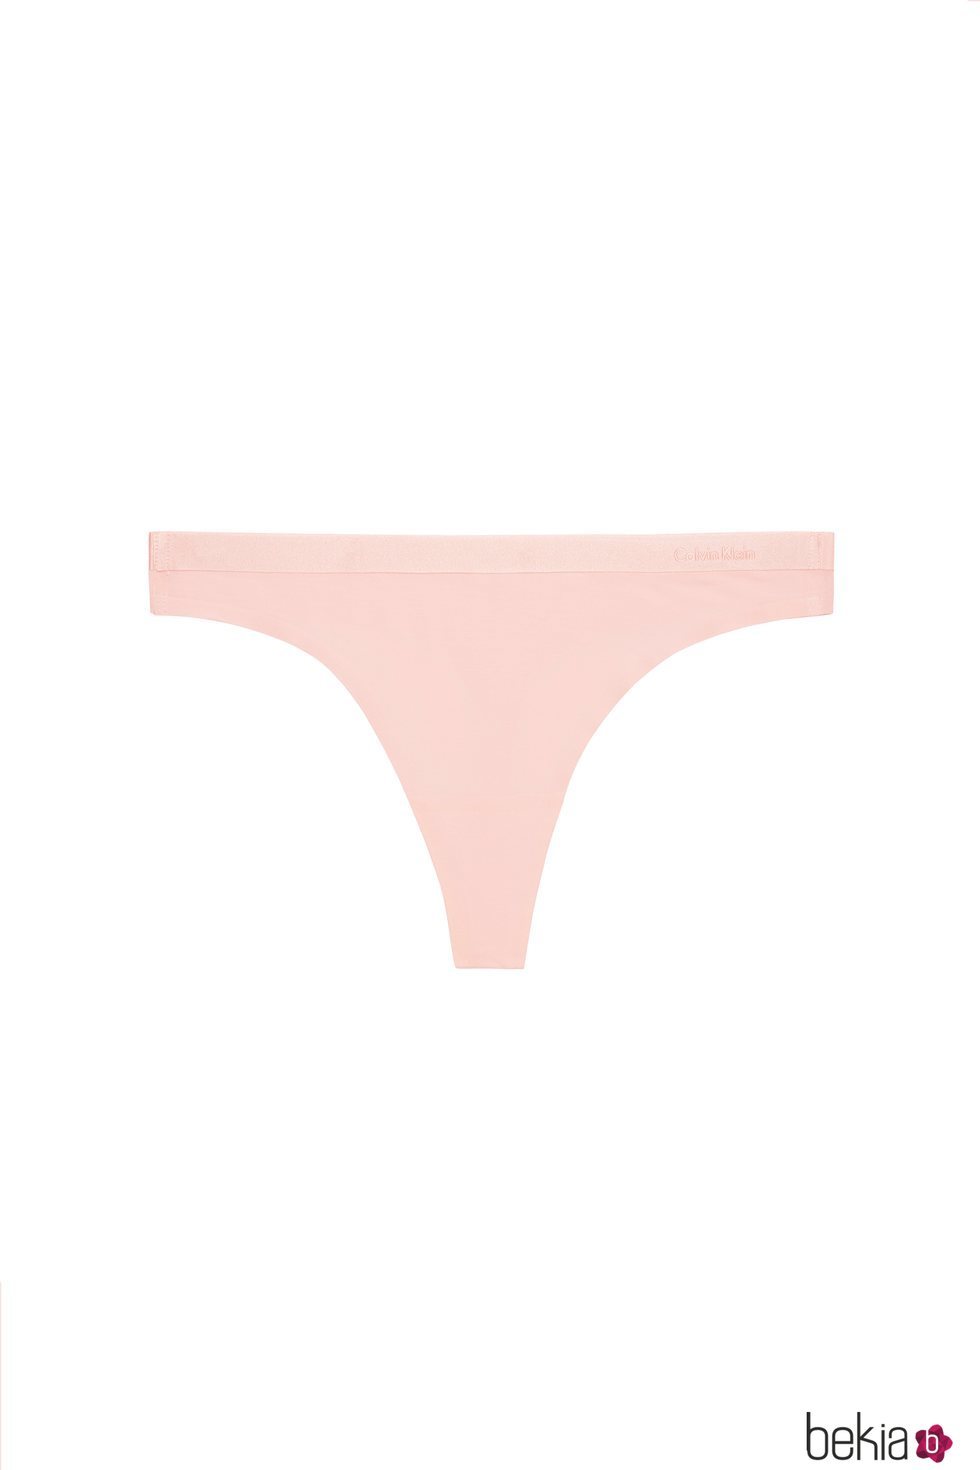 Braguitas brasileñas rosas de Calvin Klein Underwear primavera/verano 2018